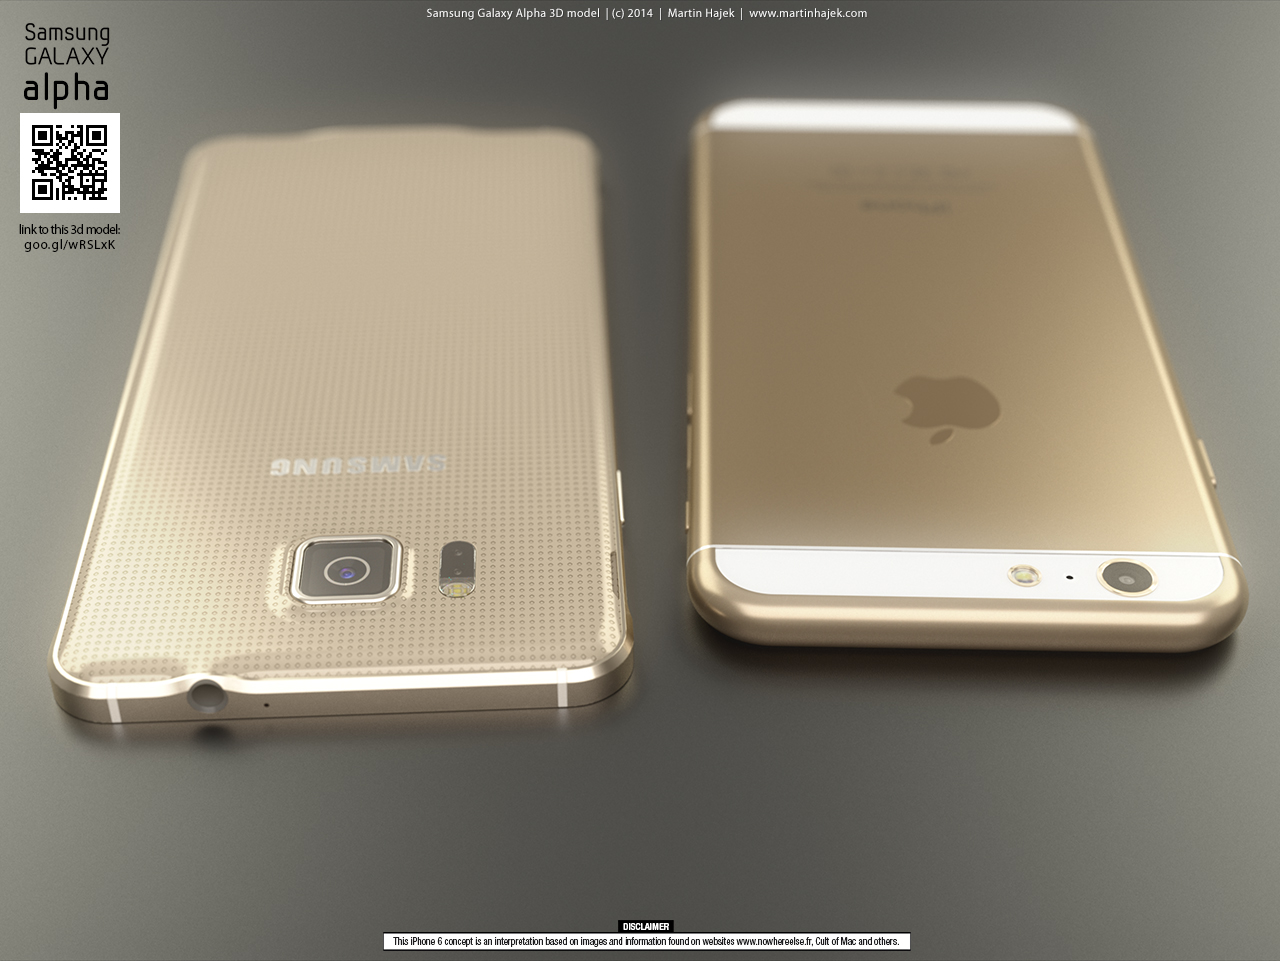 Apple iPhone 6 vs Samsung Galaxy Alpha 14